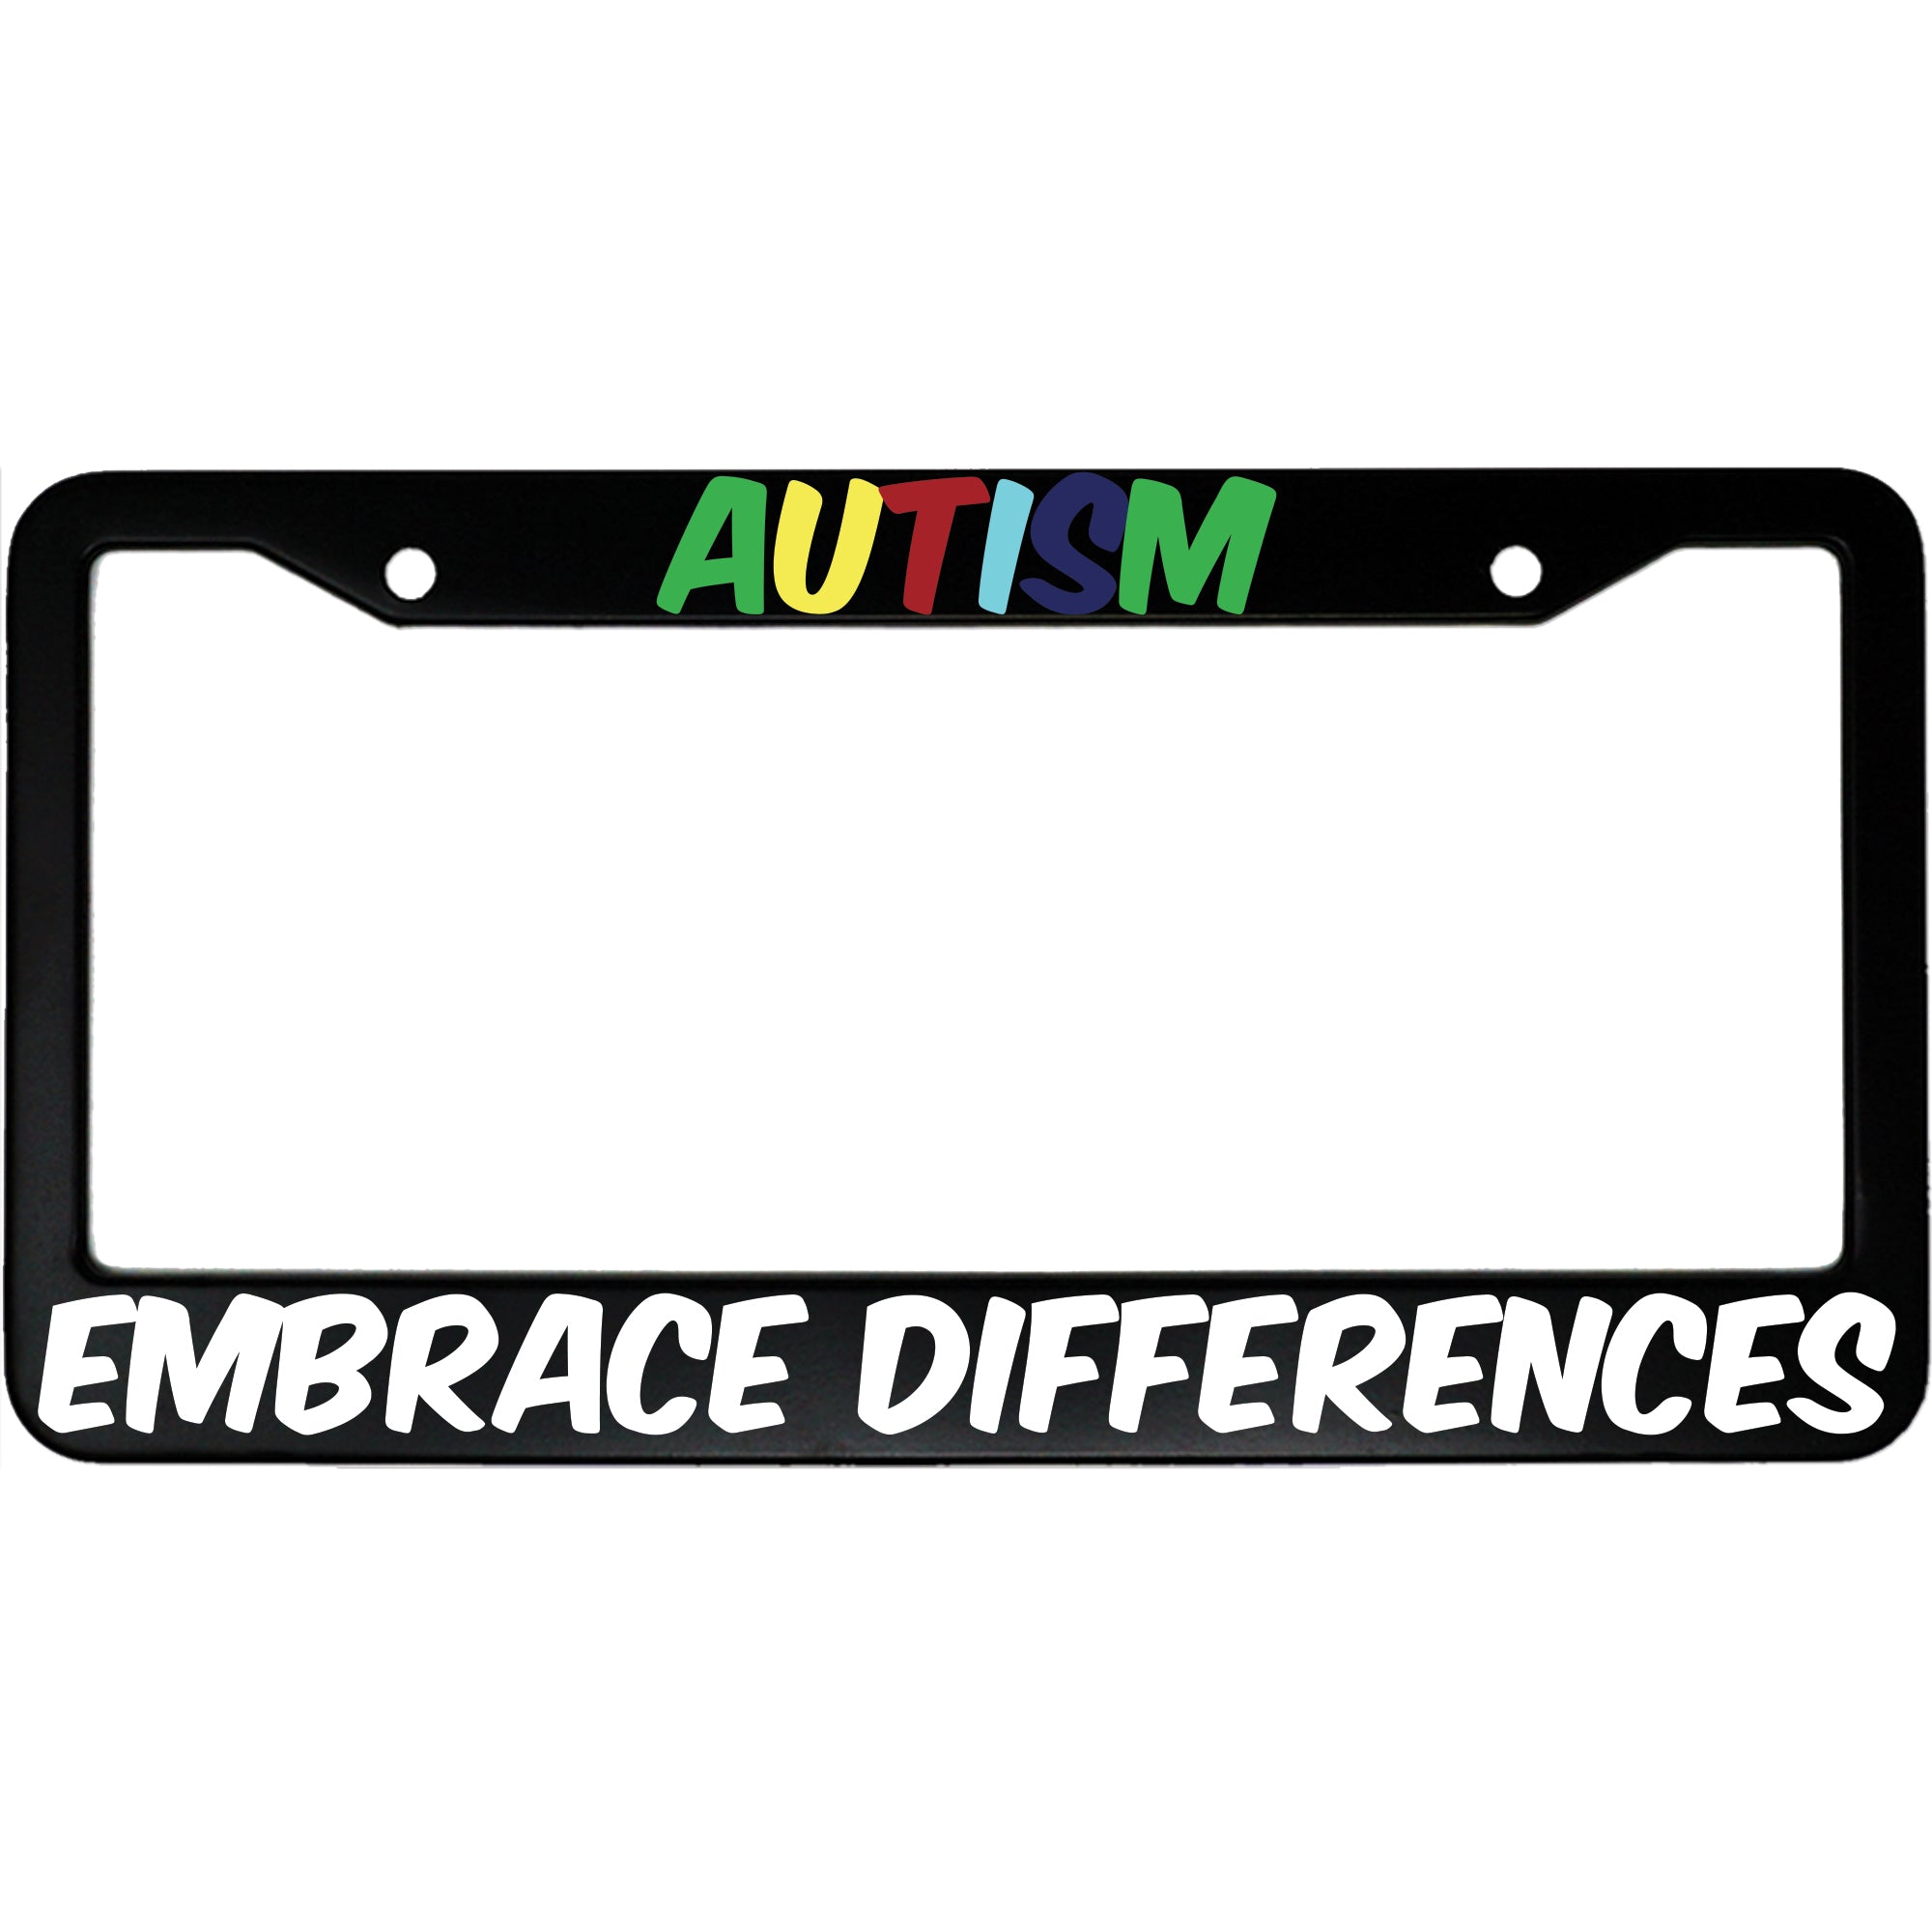 Autism Embrace Differences